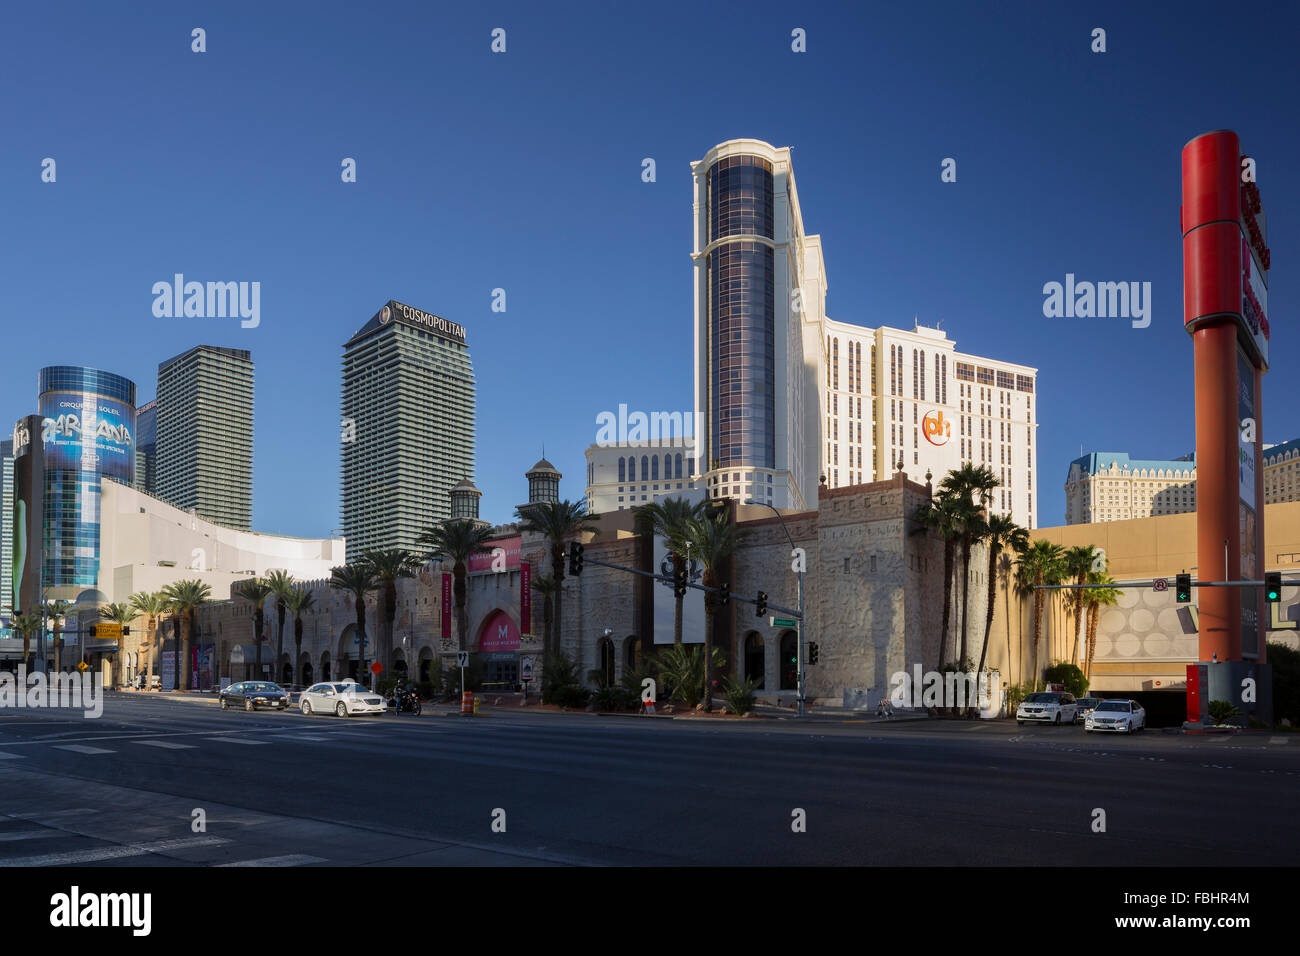 Planet Hollywood, Cosmopolitan, Strip, South Las Vegas Boulevard, Las Vegas, Nevada, USA Stock Photo